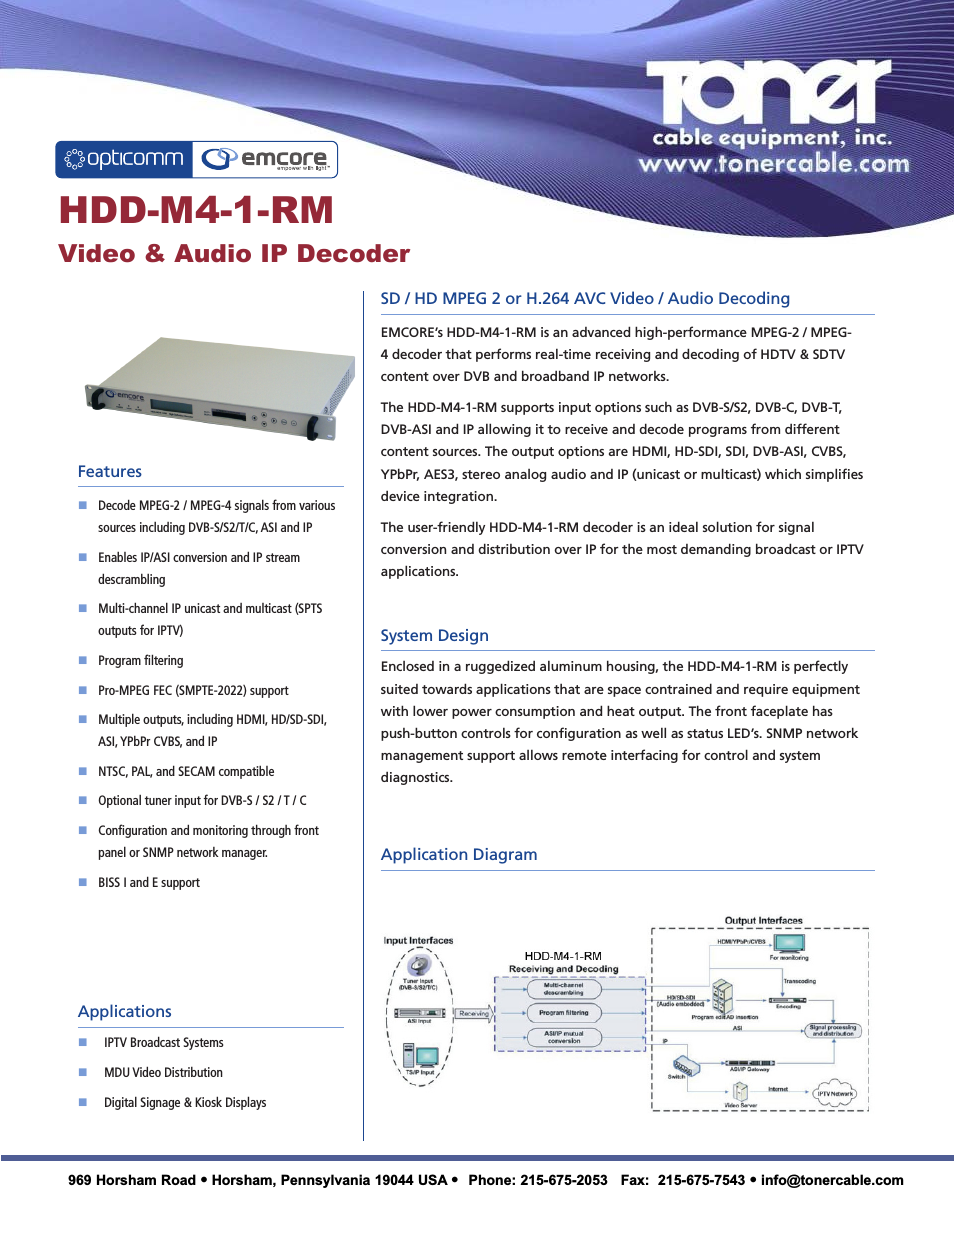 HDD-M4-1-RM Video & Audio IP Decoder